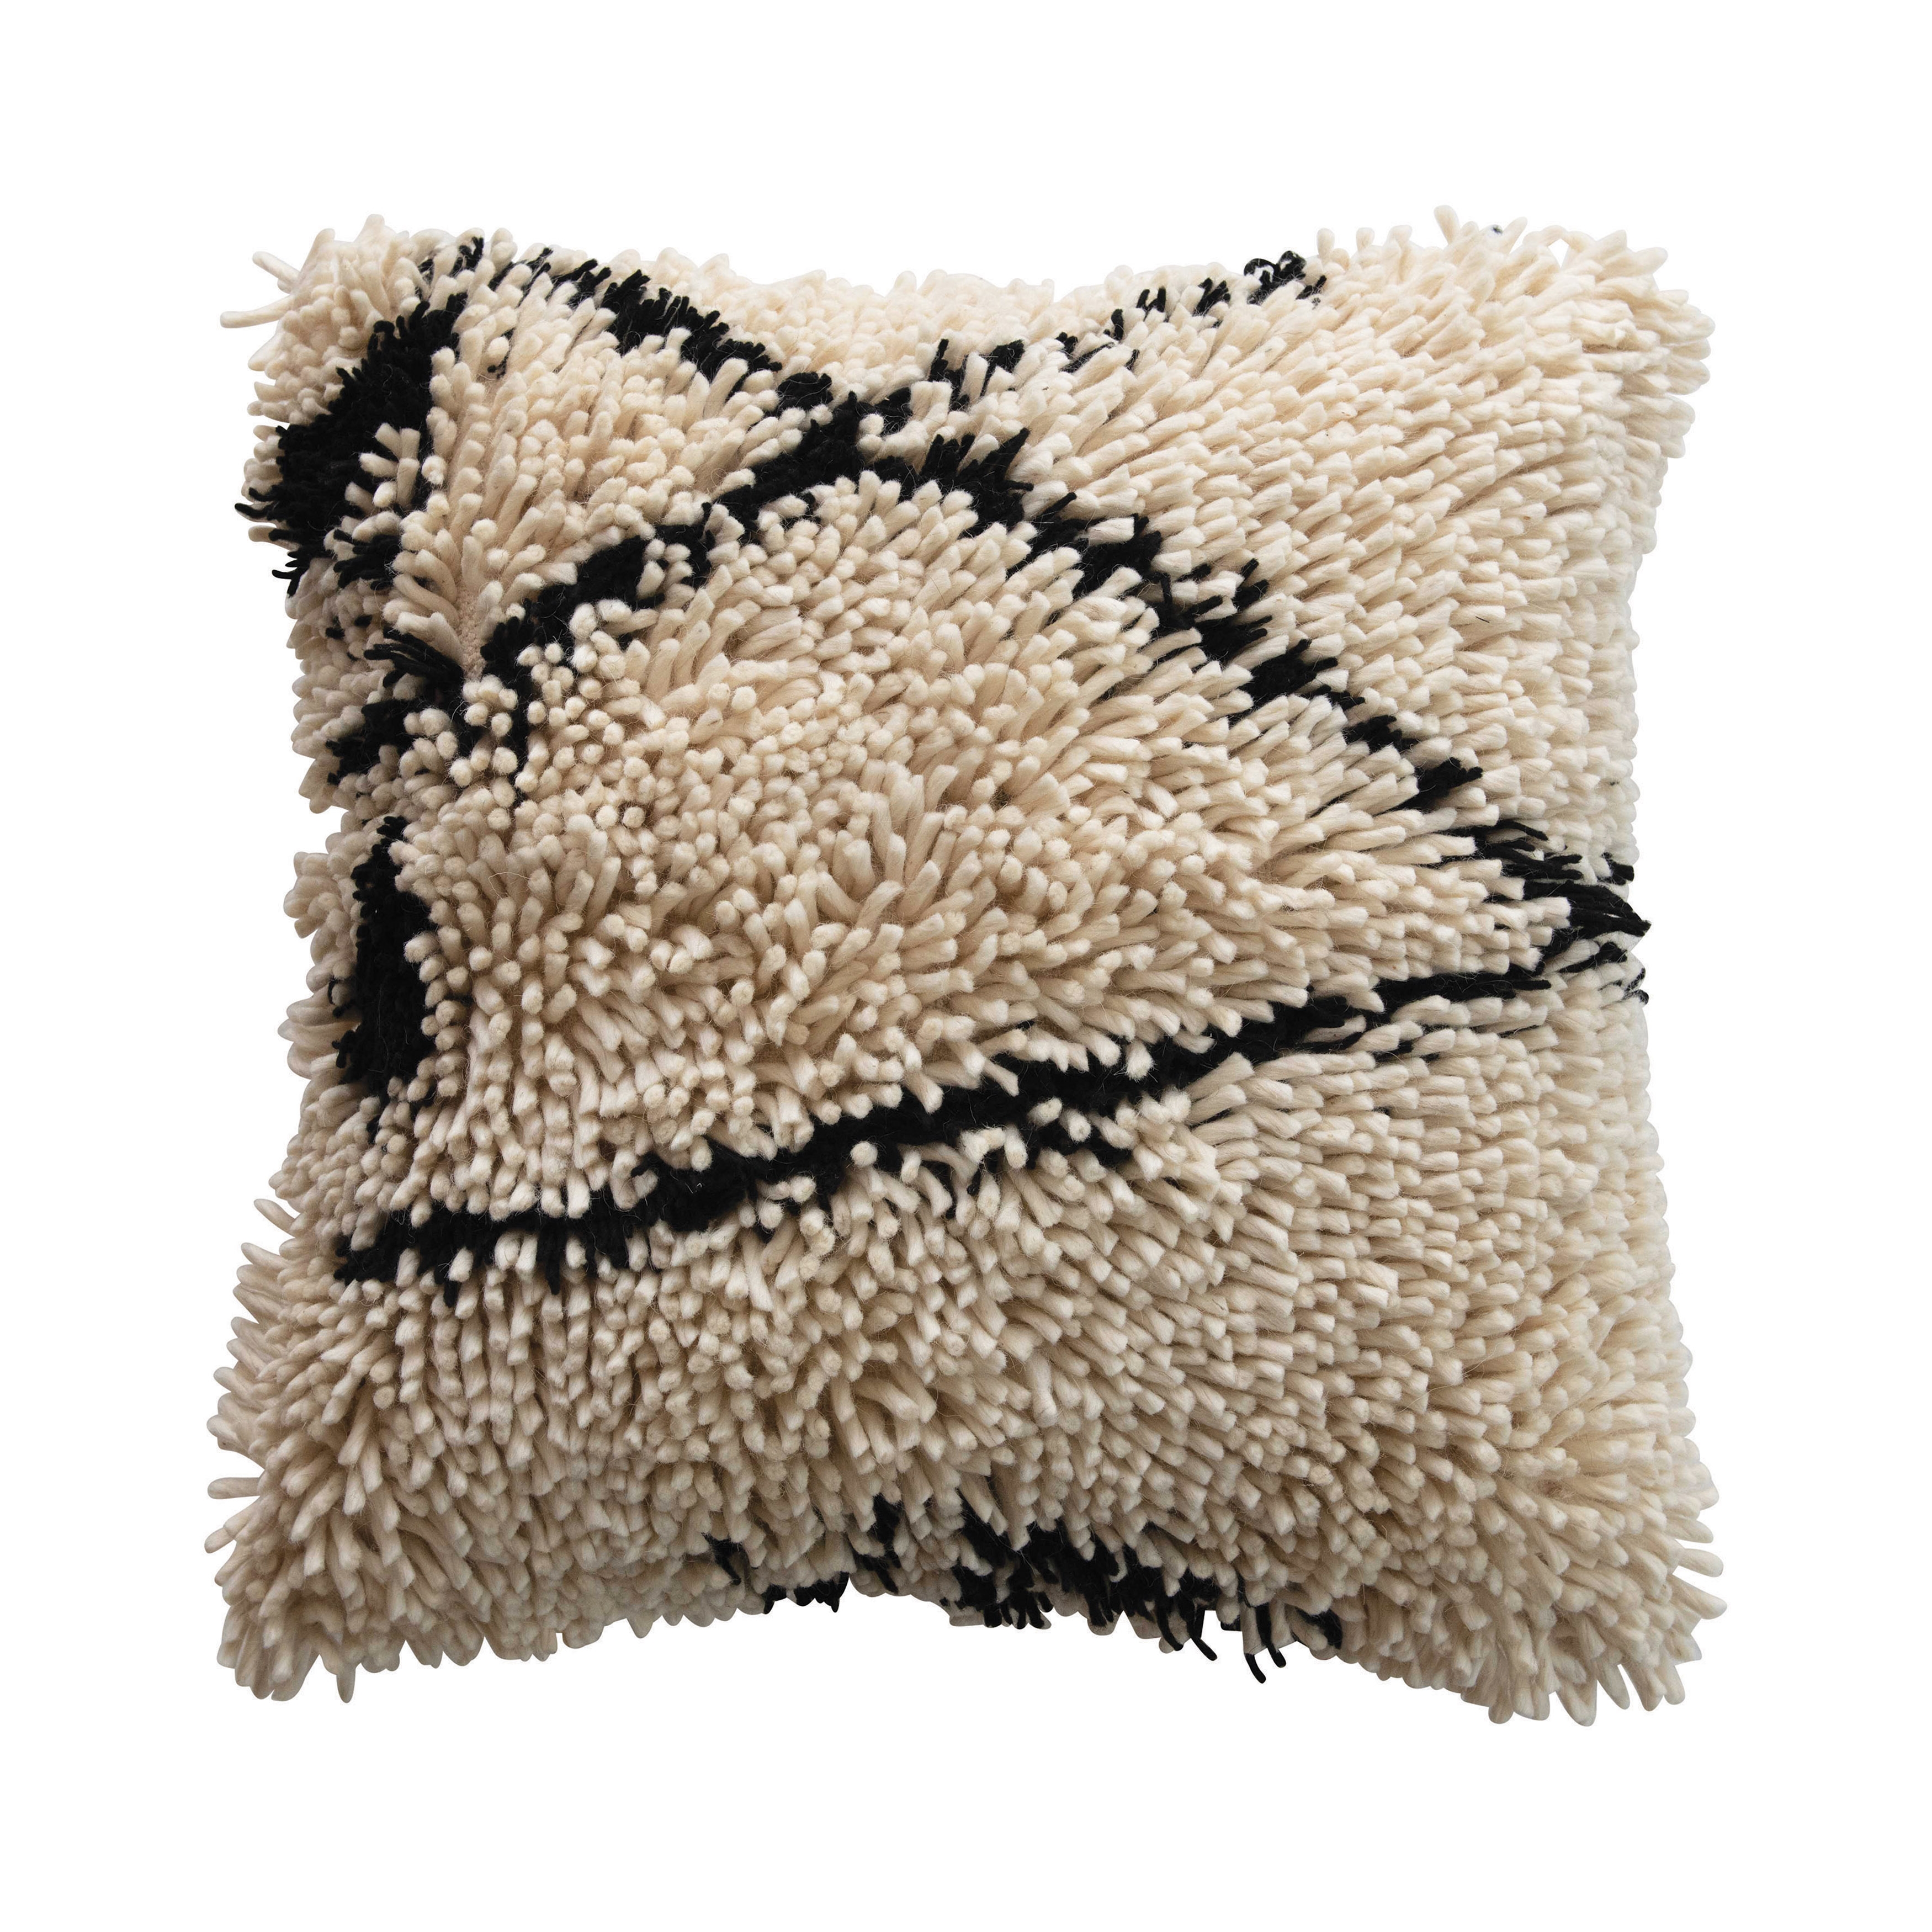 Woven Wool Shag Pillow, Black & Cream Color - Image 0